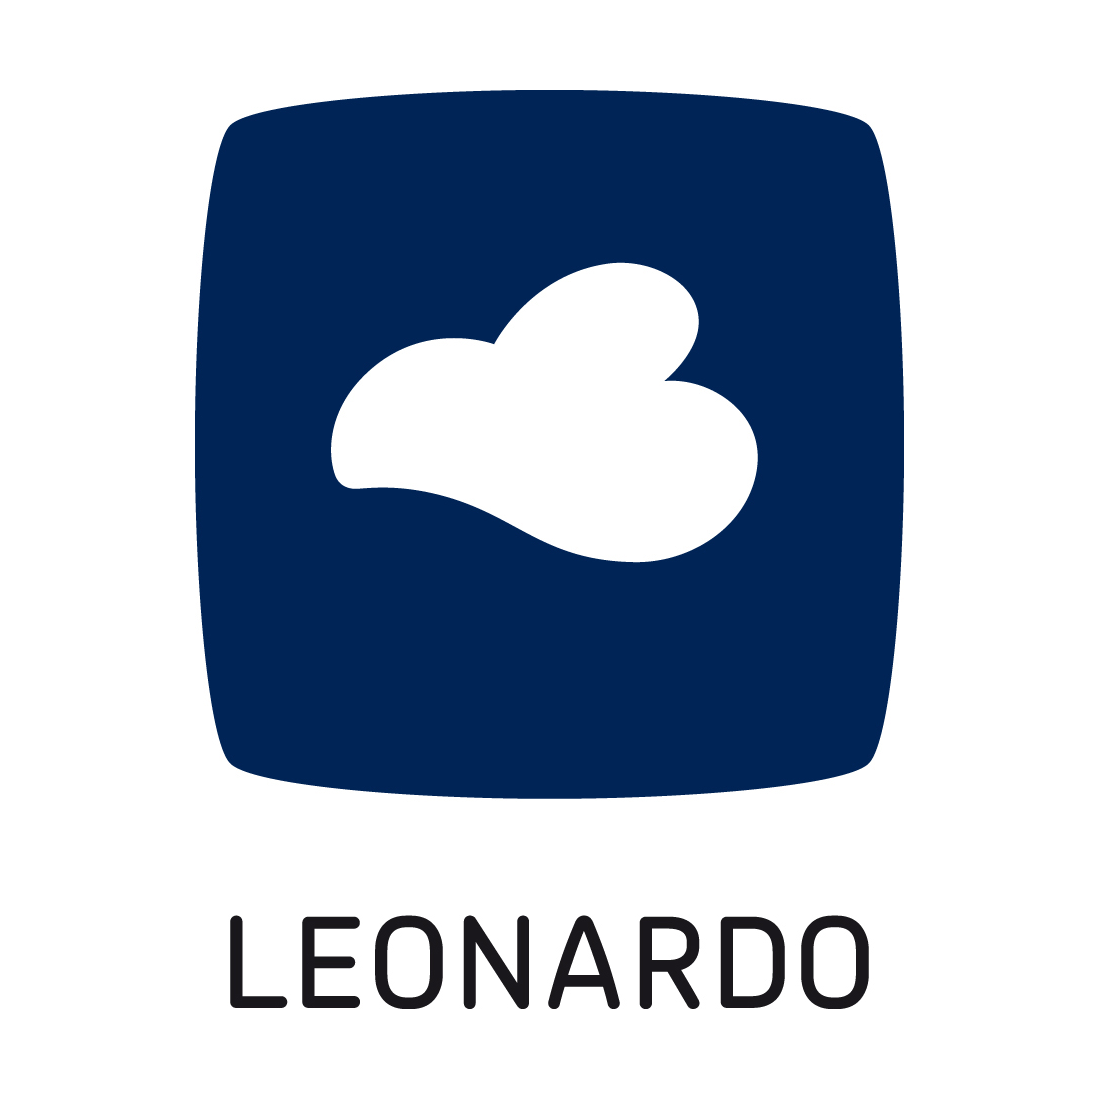 View our collection of Leonardo Sydonios